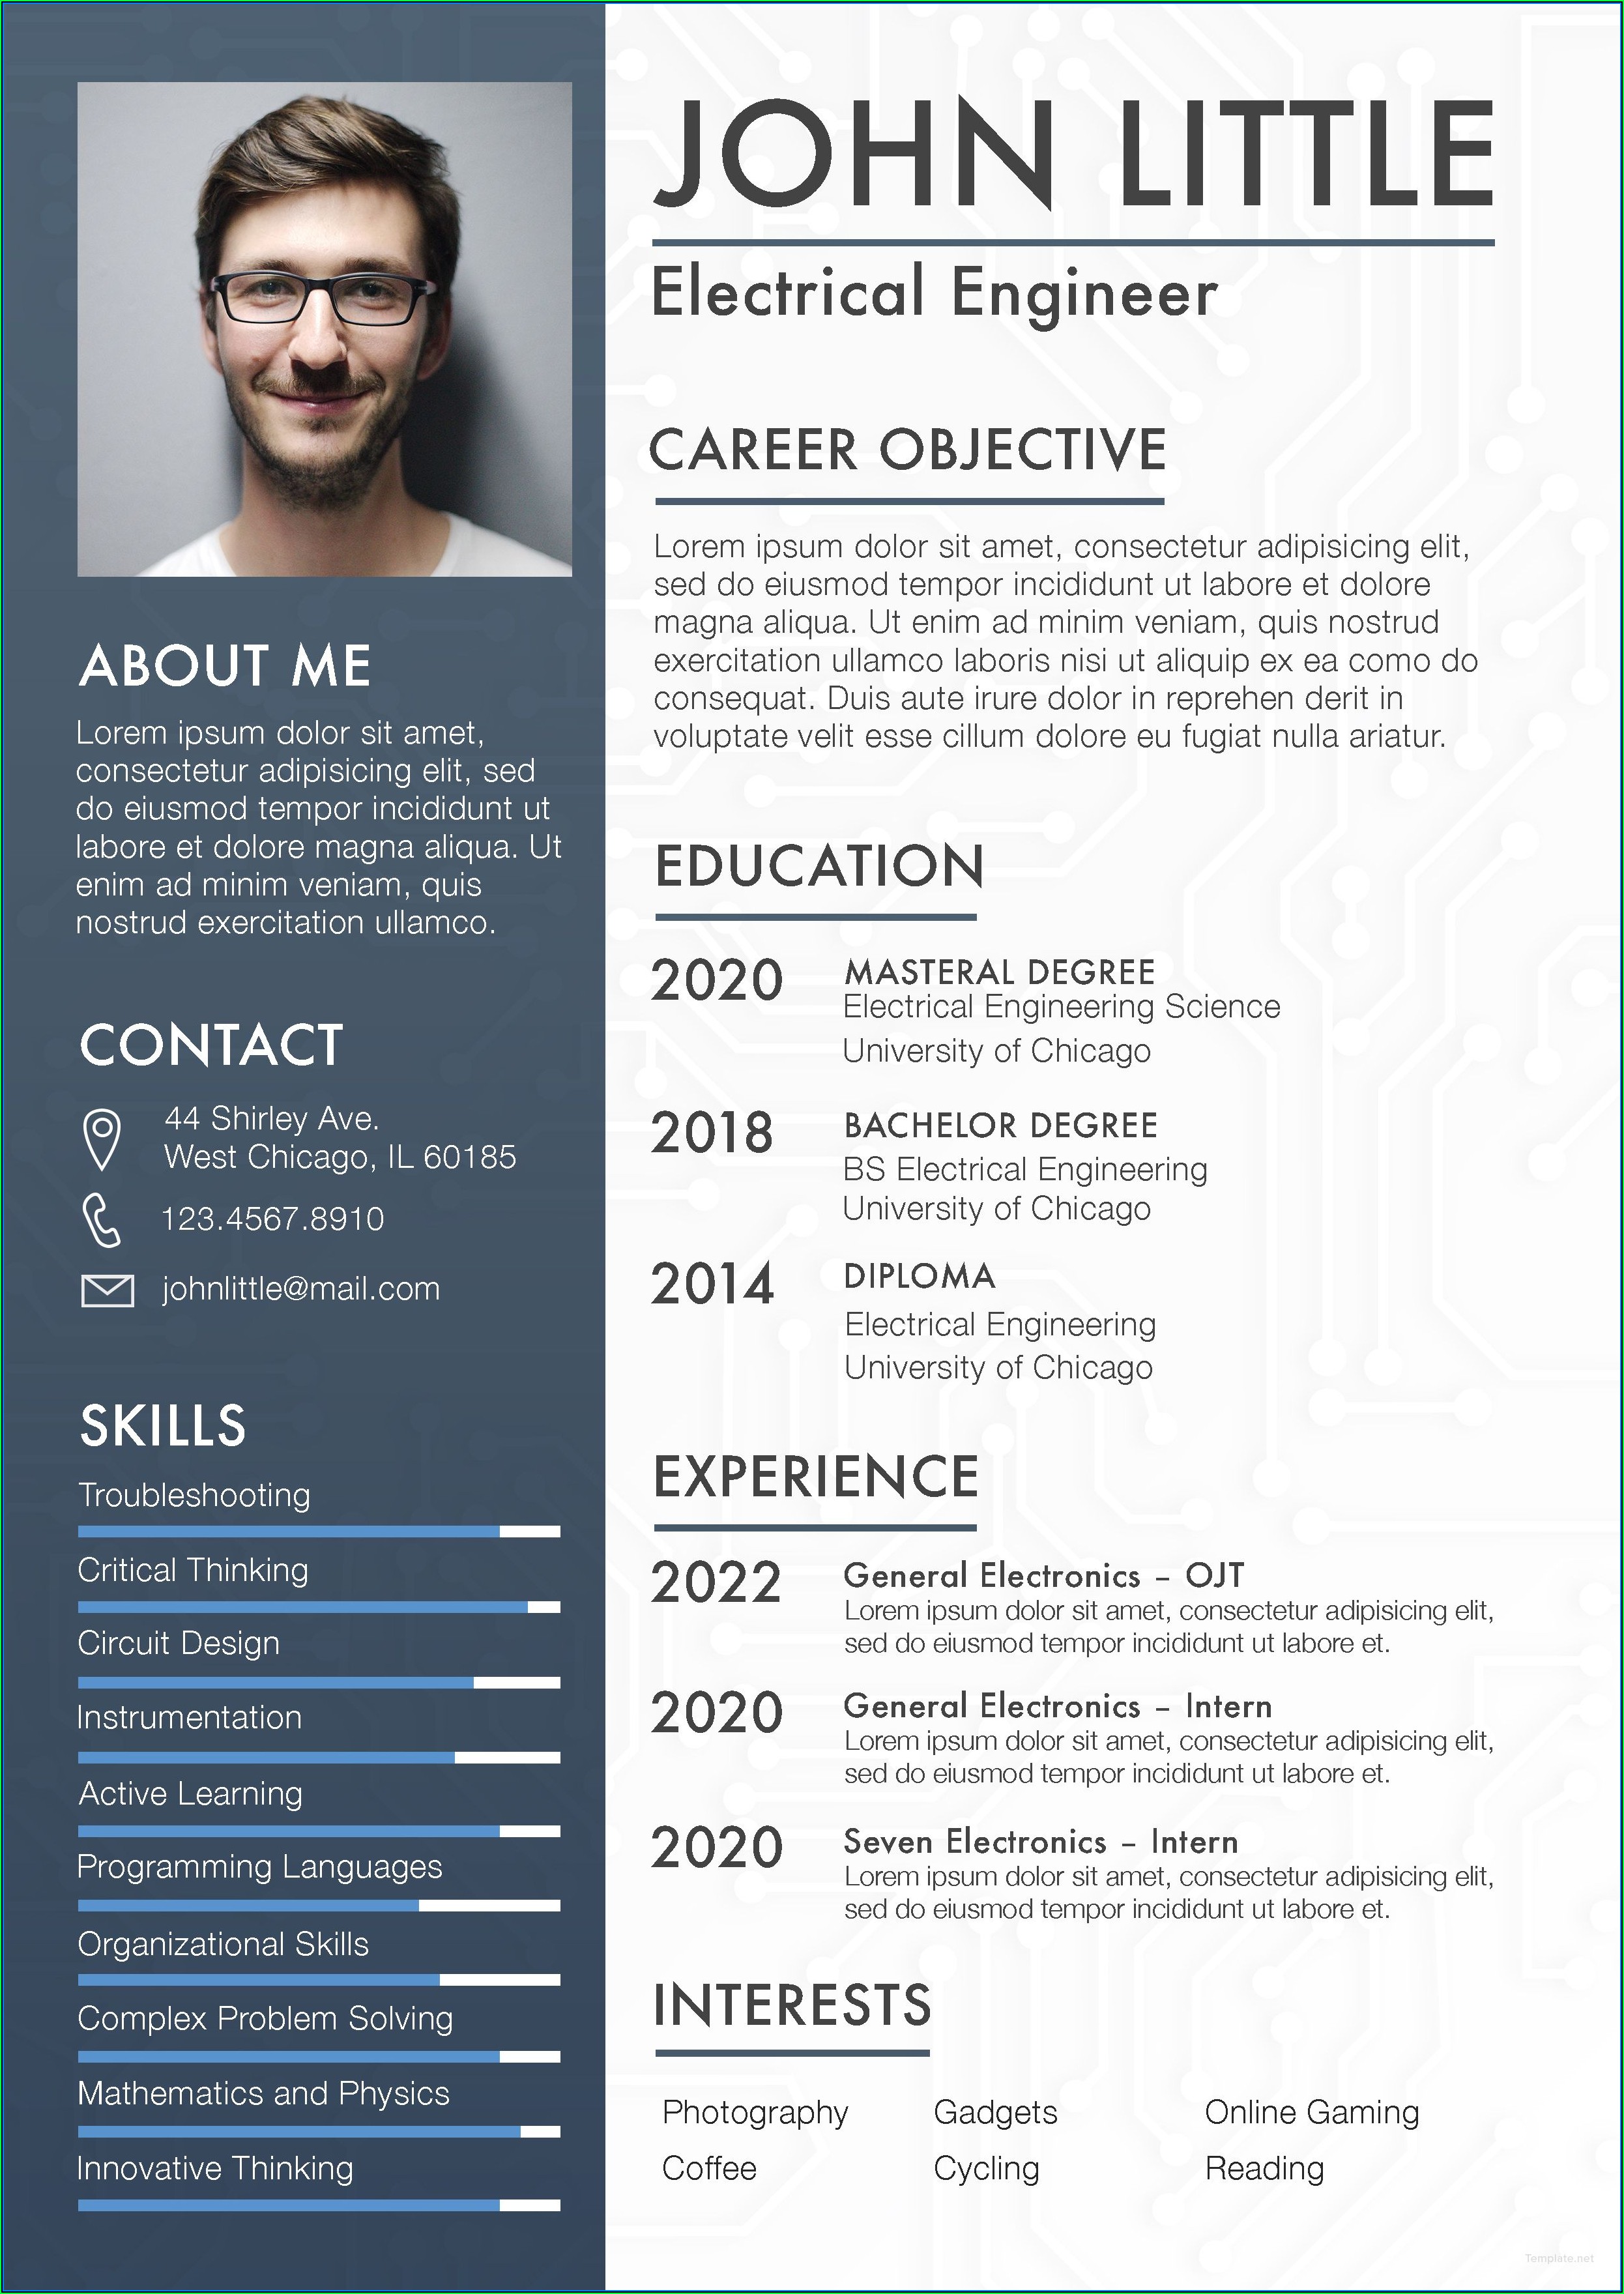 resume maker for students